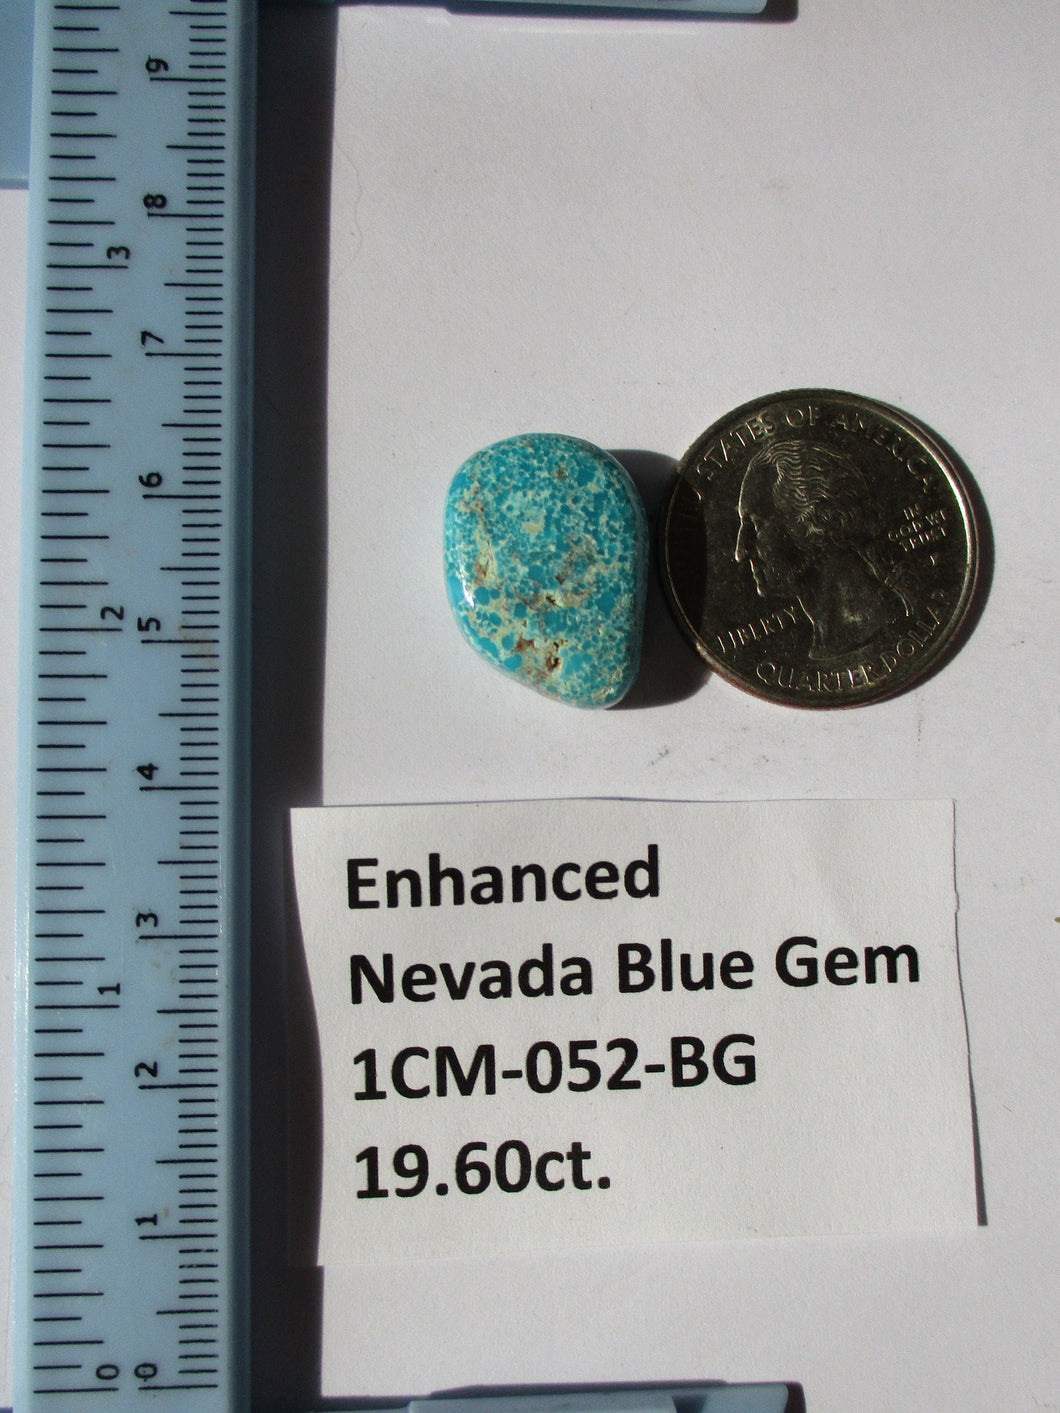 19.6 ct (24x15x7 mm) Enhanced Nevada Blue Gem Turquoise, Cabochon Gemstone, # 1CM 052 s